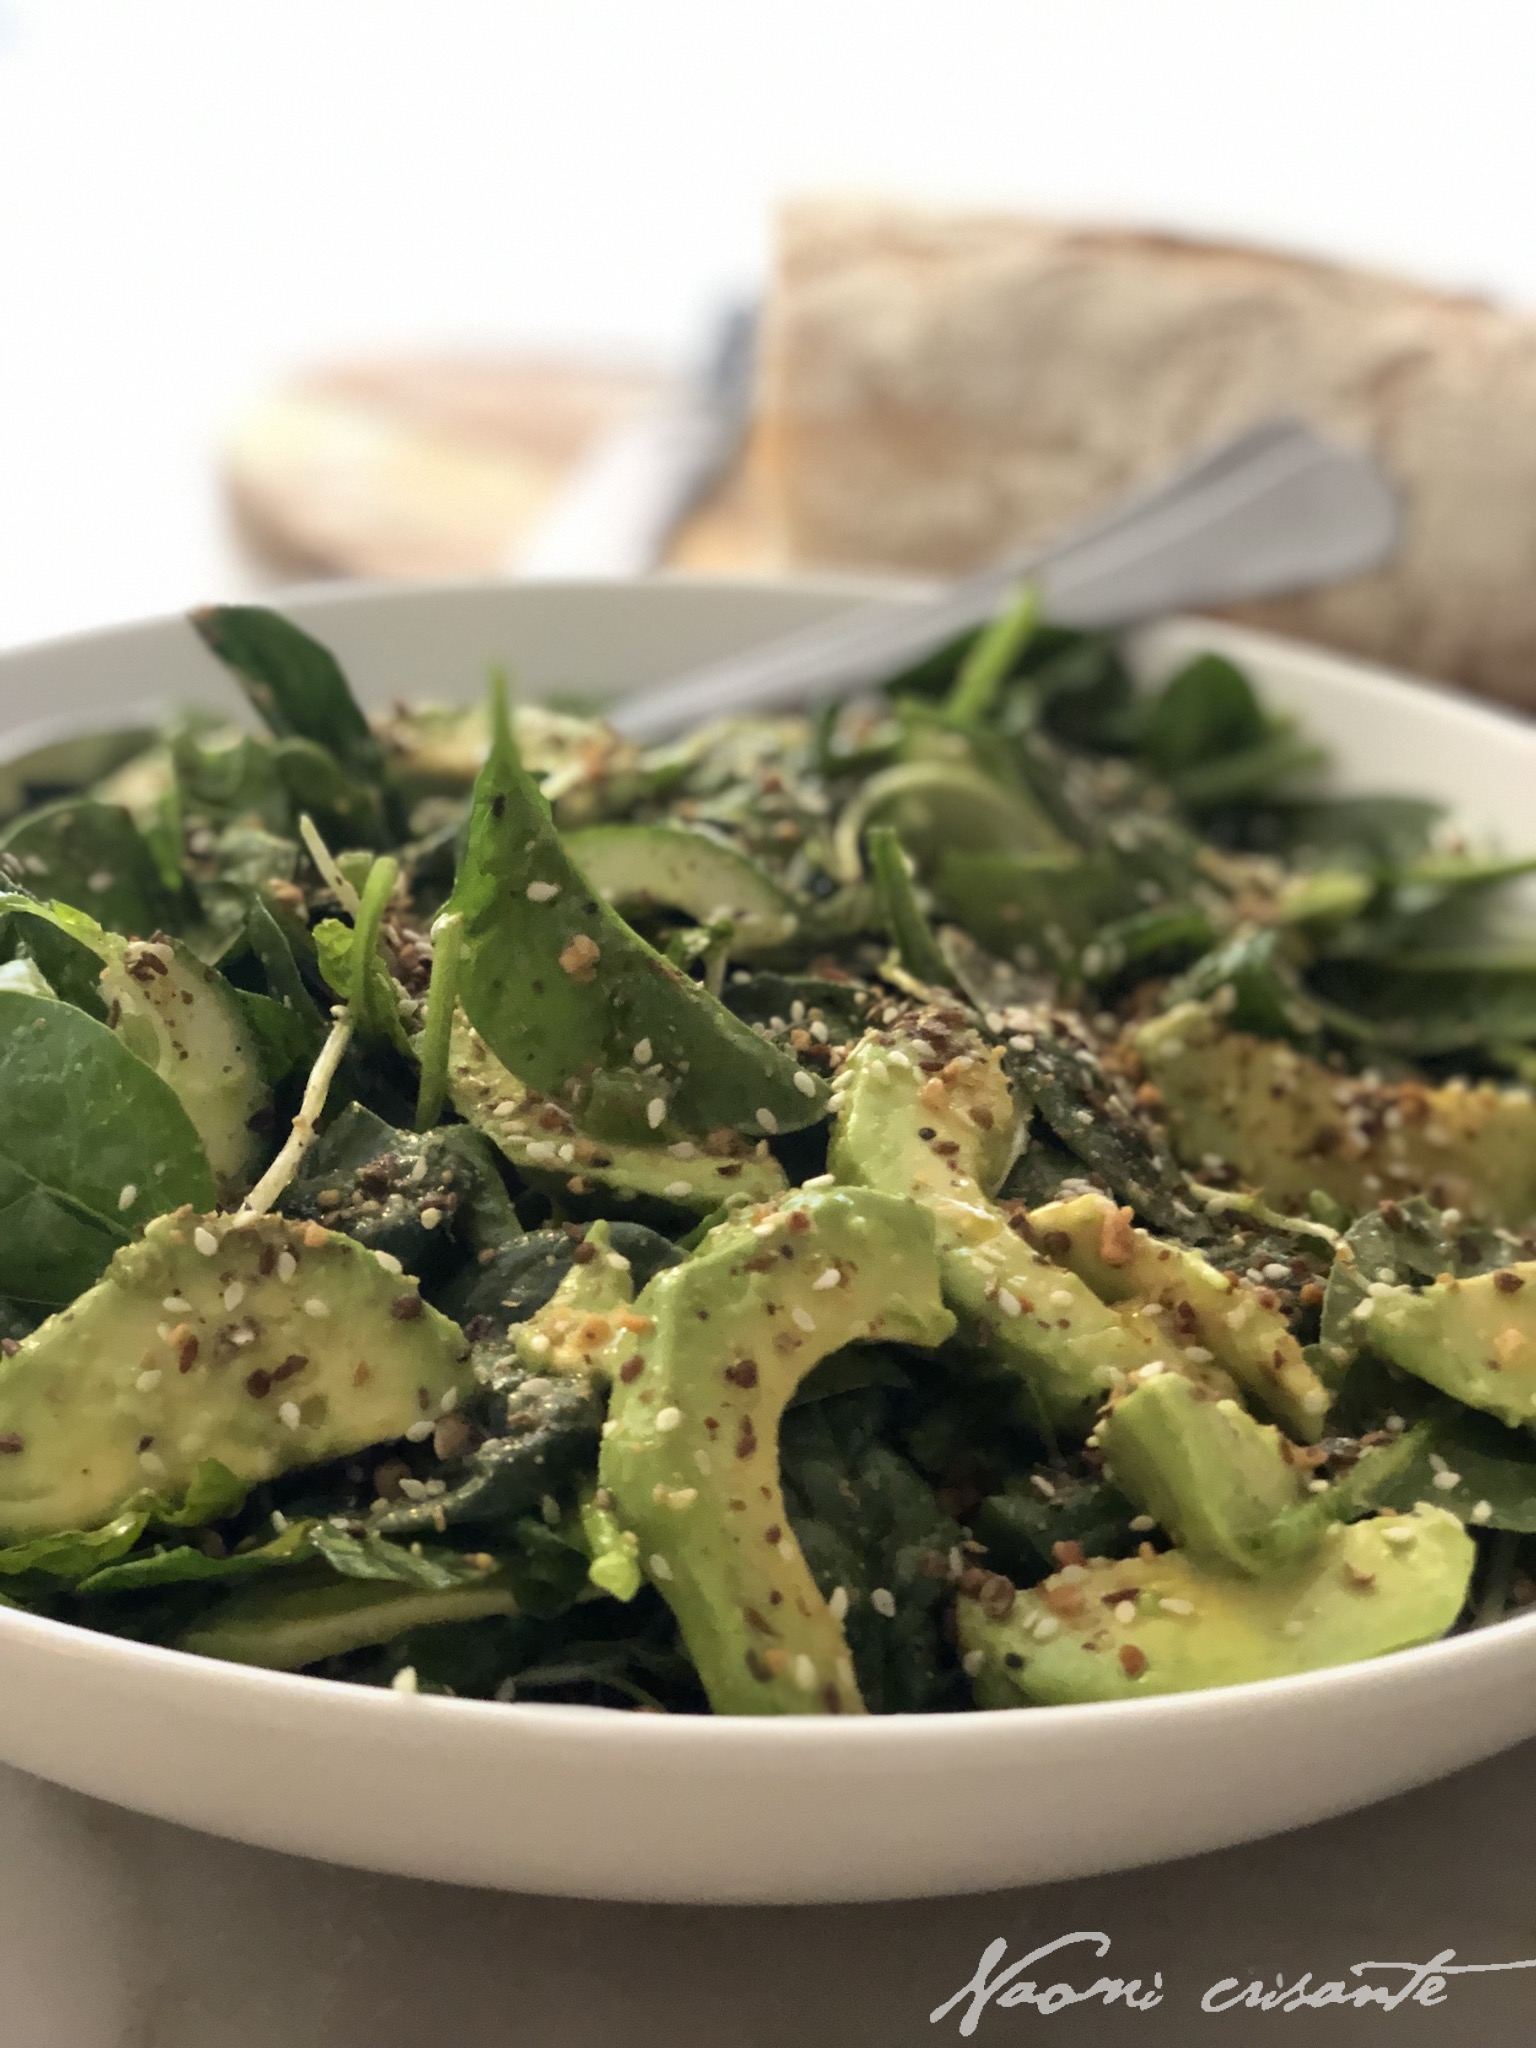 Avocado and Spinach Salad